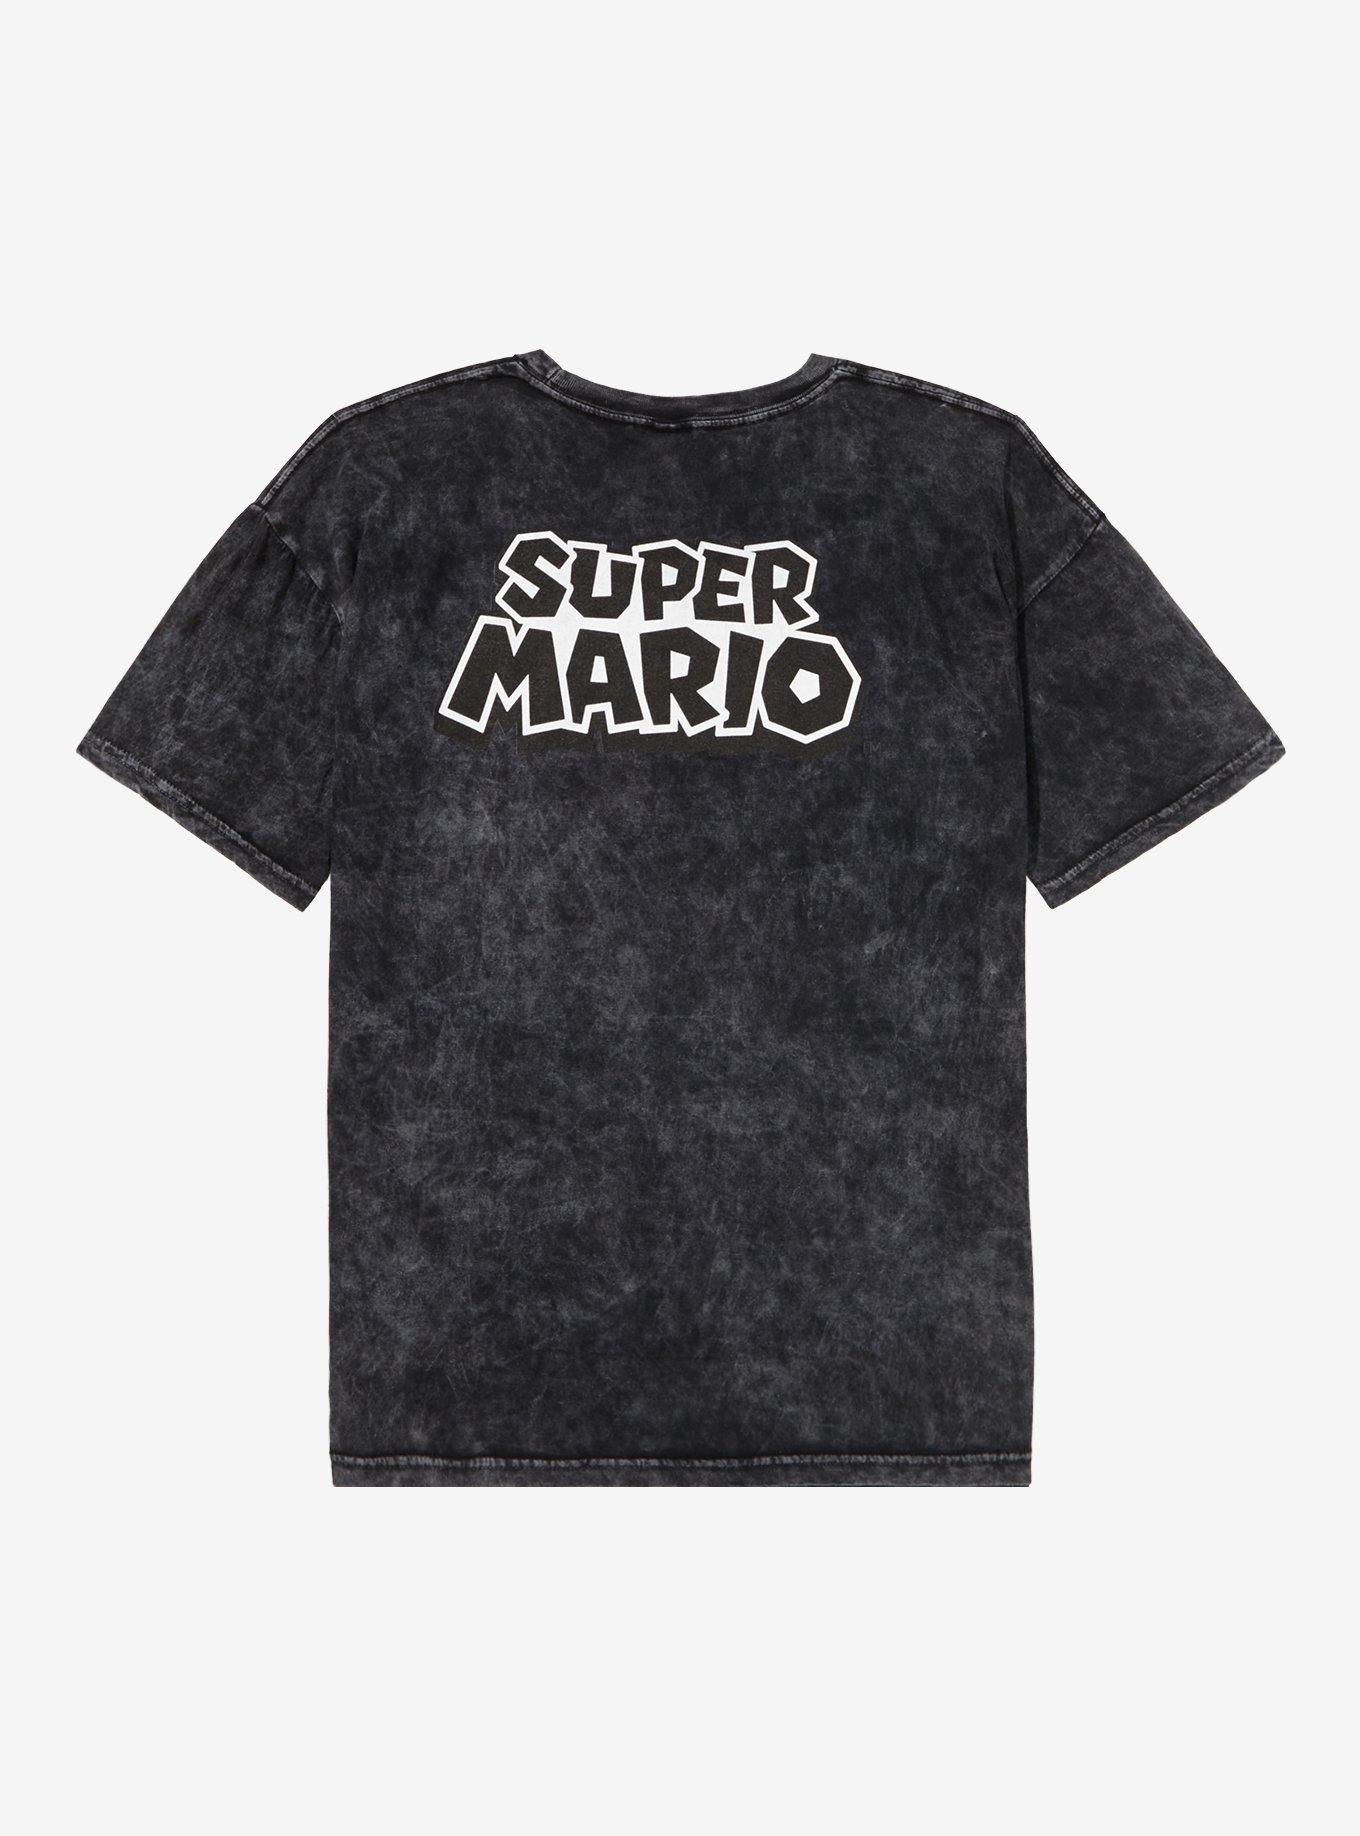 Super Mario Dry Bones Mineral Wash Boyfriend Fit Girls T-Shirt, MULTI, alternate